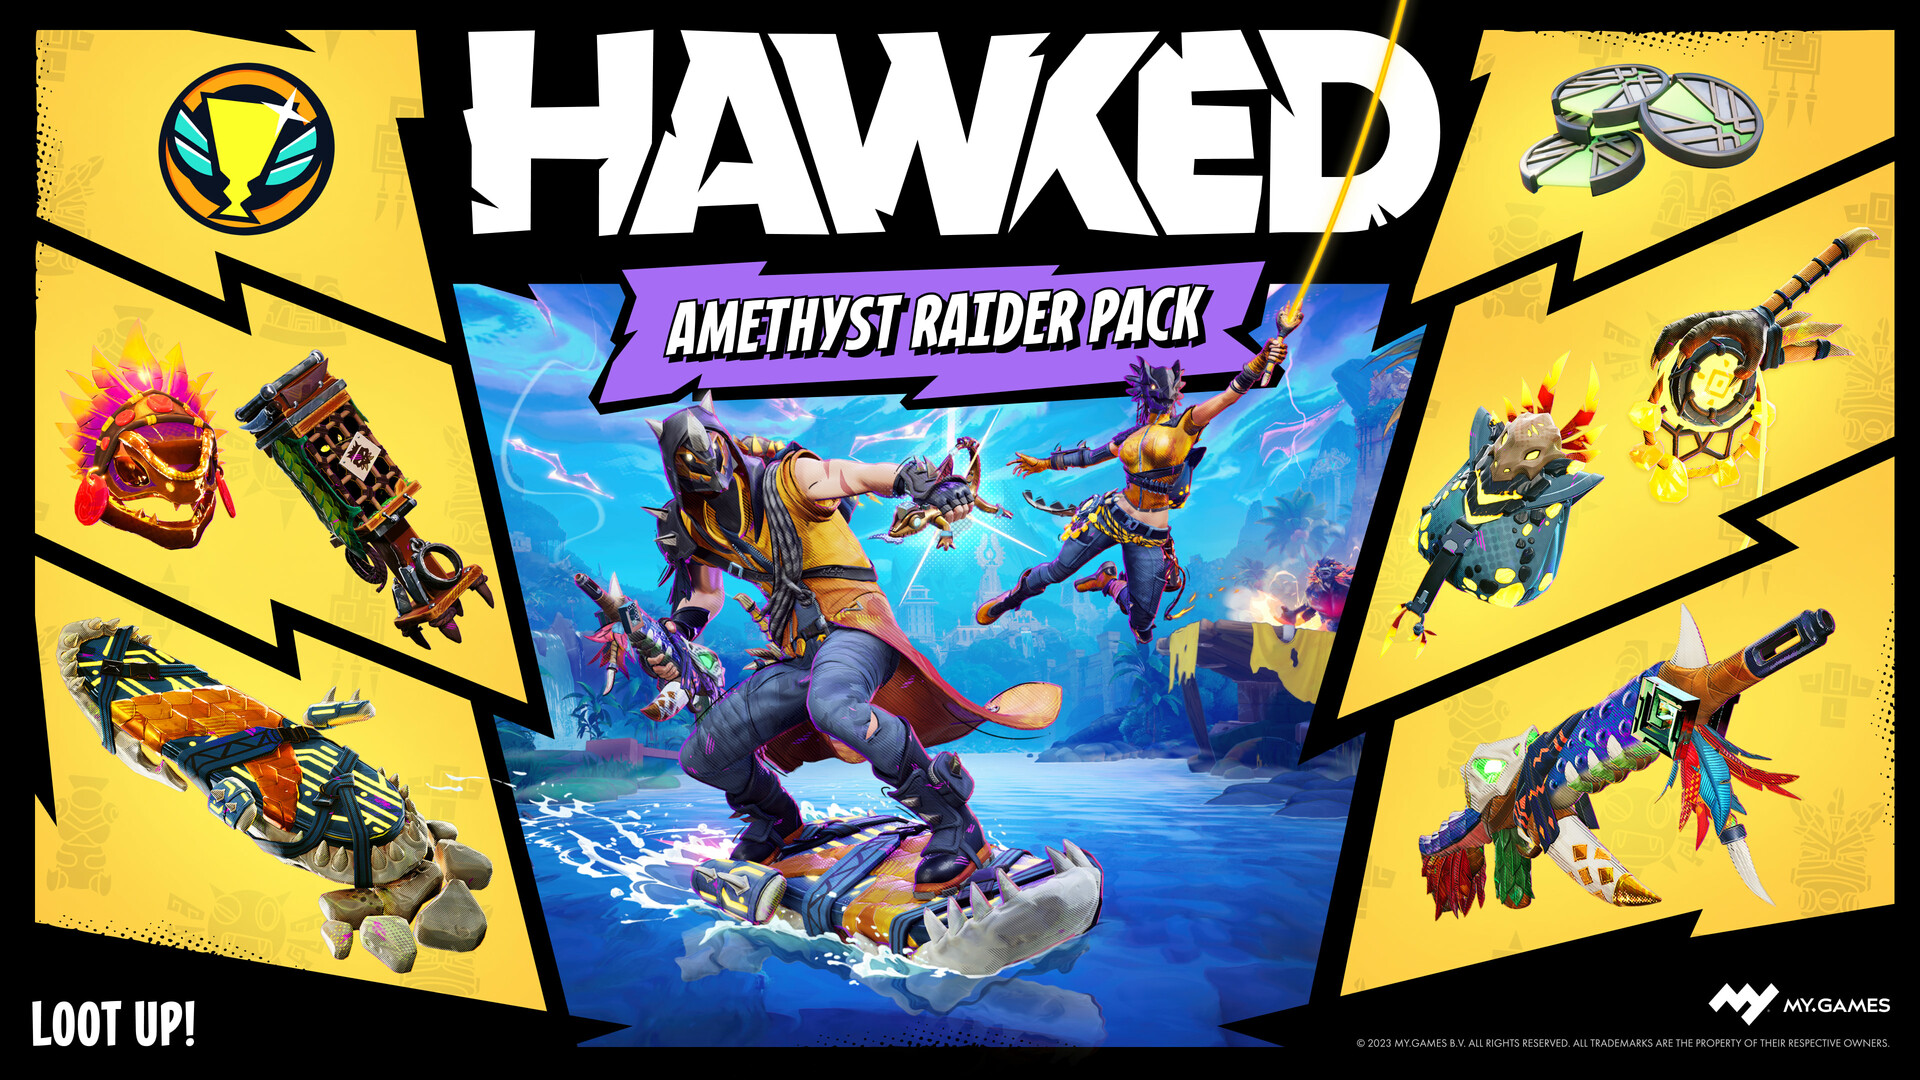 HAWKED — Amethyst Raider Pack Featured Screenshot #1